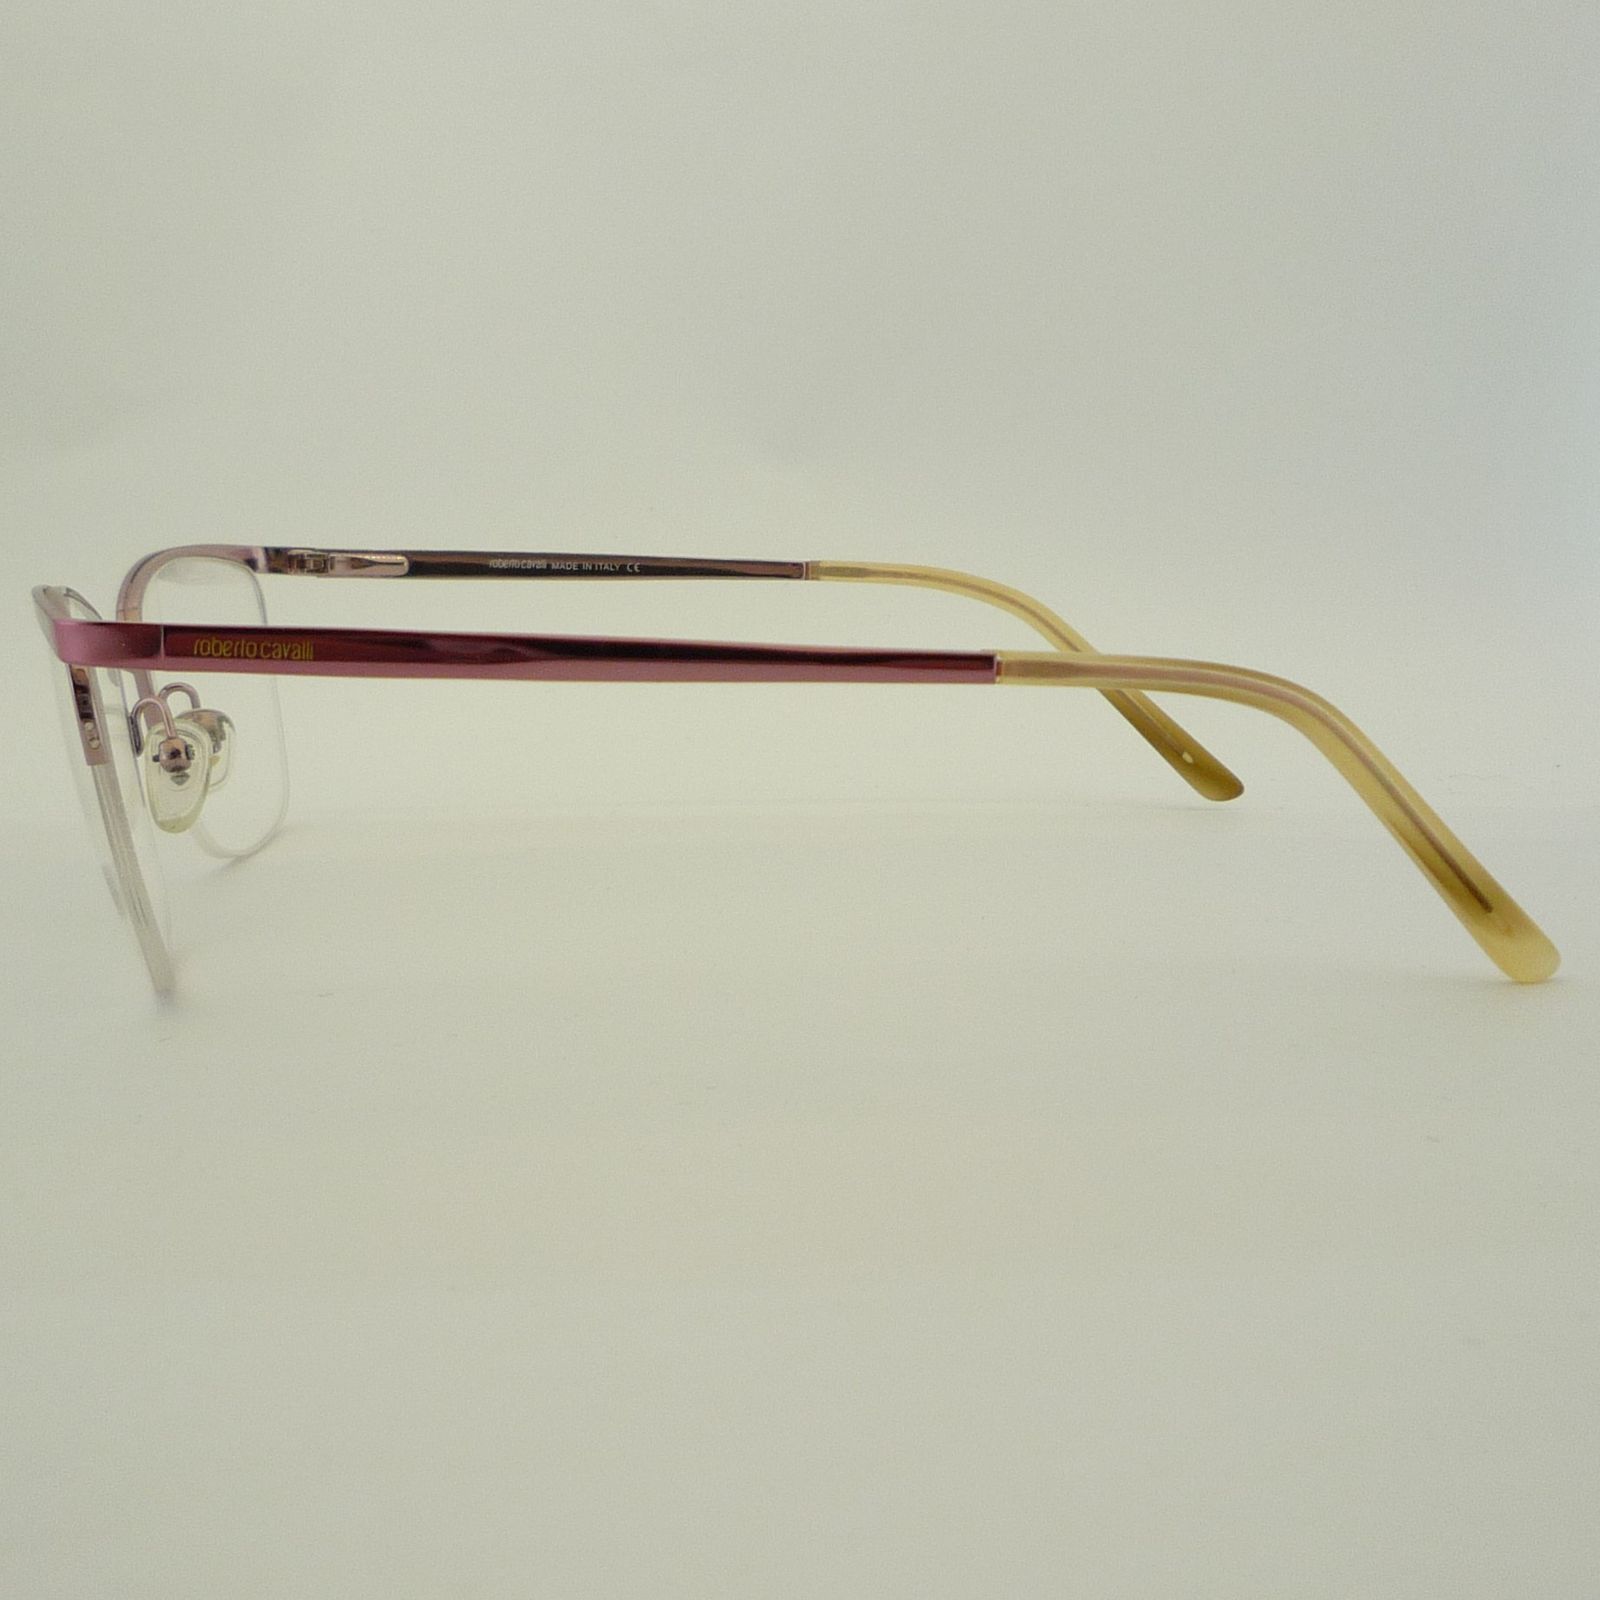 فریم عینک طبی زنانه روبرتو کاوالی مدل 6581c6 -  - 8